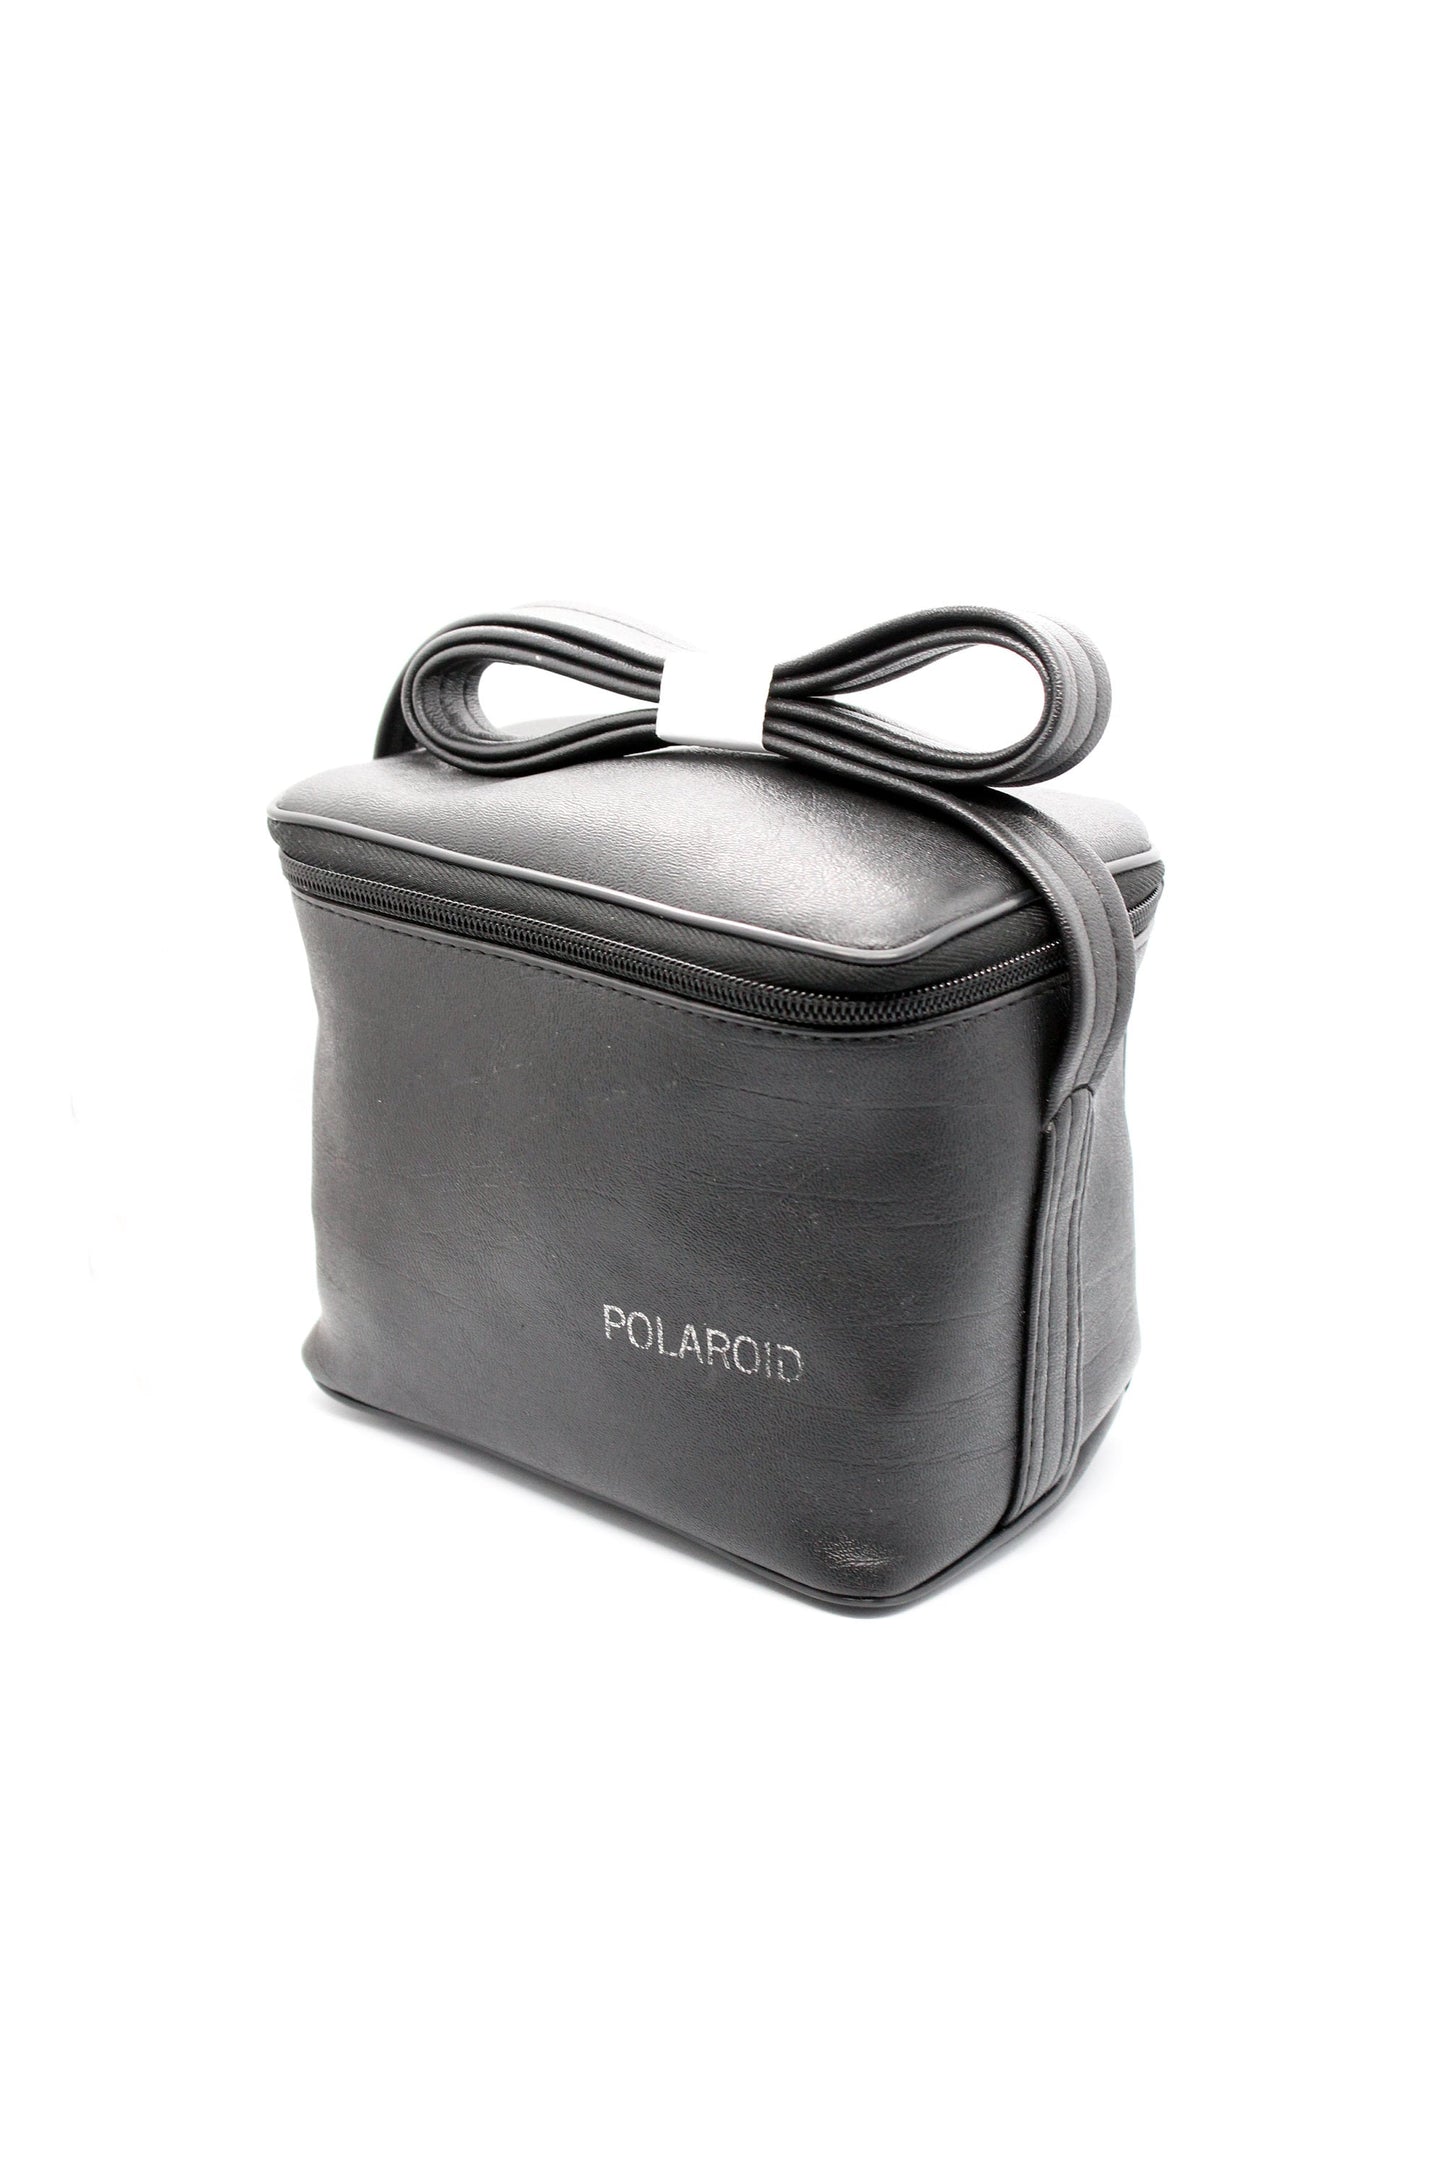 Polaroid Transport Bag - Polaroid Carry Case - Model Polaroid II